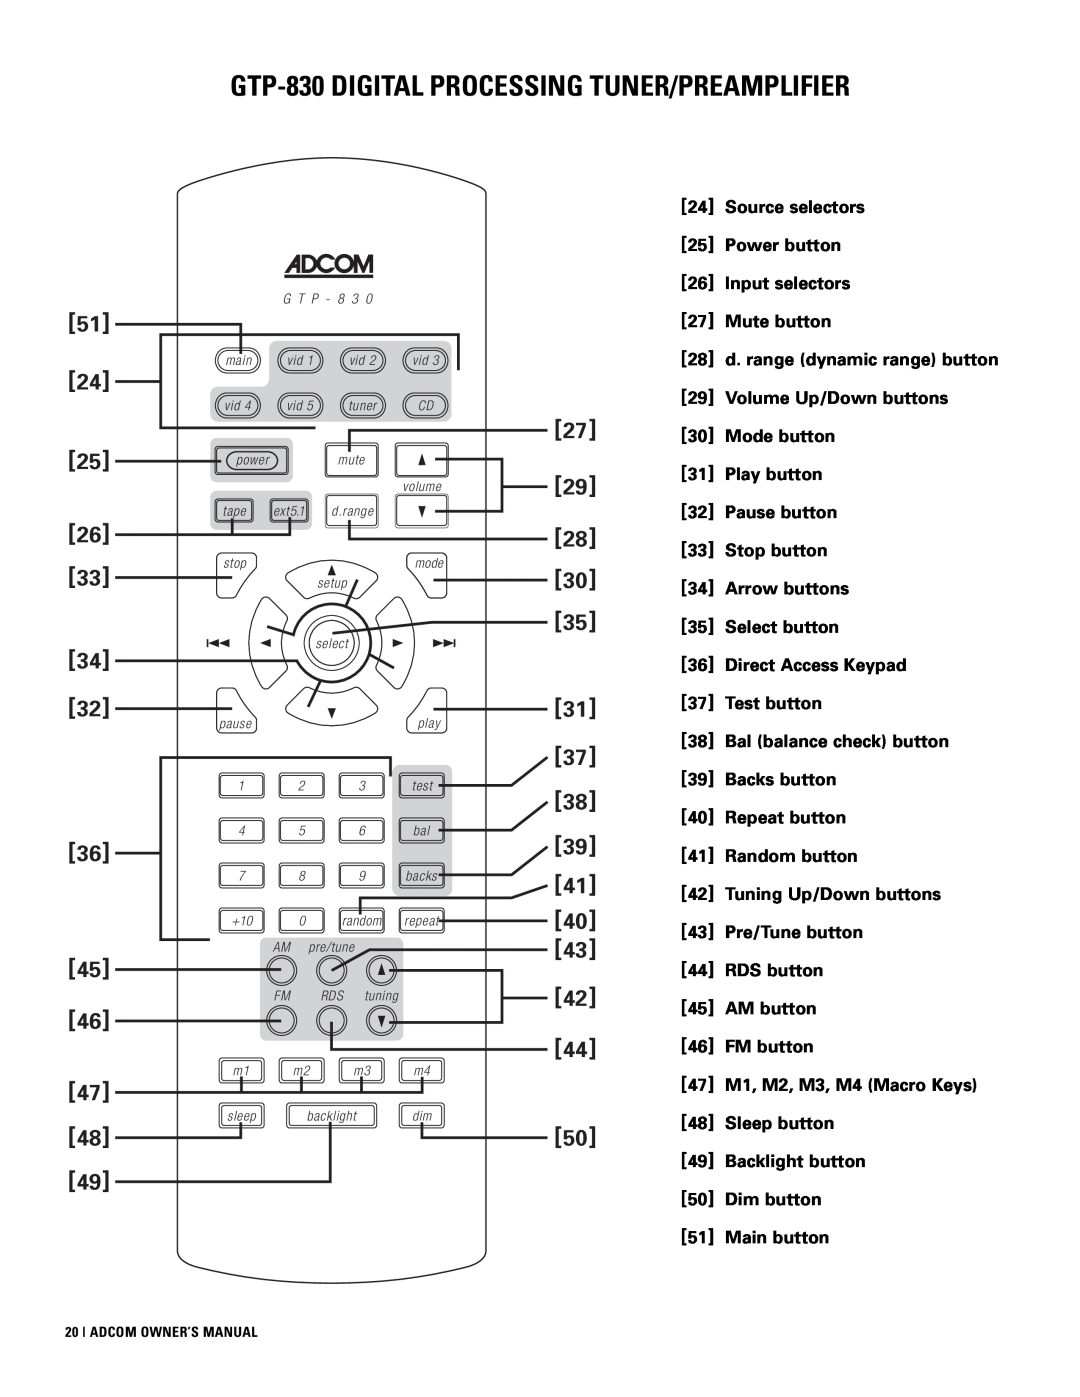 Adcom owner manual GTP-830DIGITAL PROCESSING TUNER/PREAMPLIFIER, 51 25 26 34 36 45 47, Source selectors 